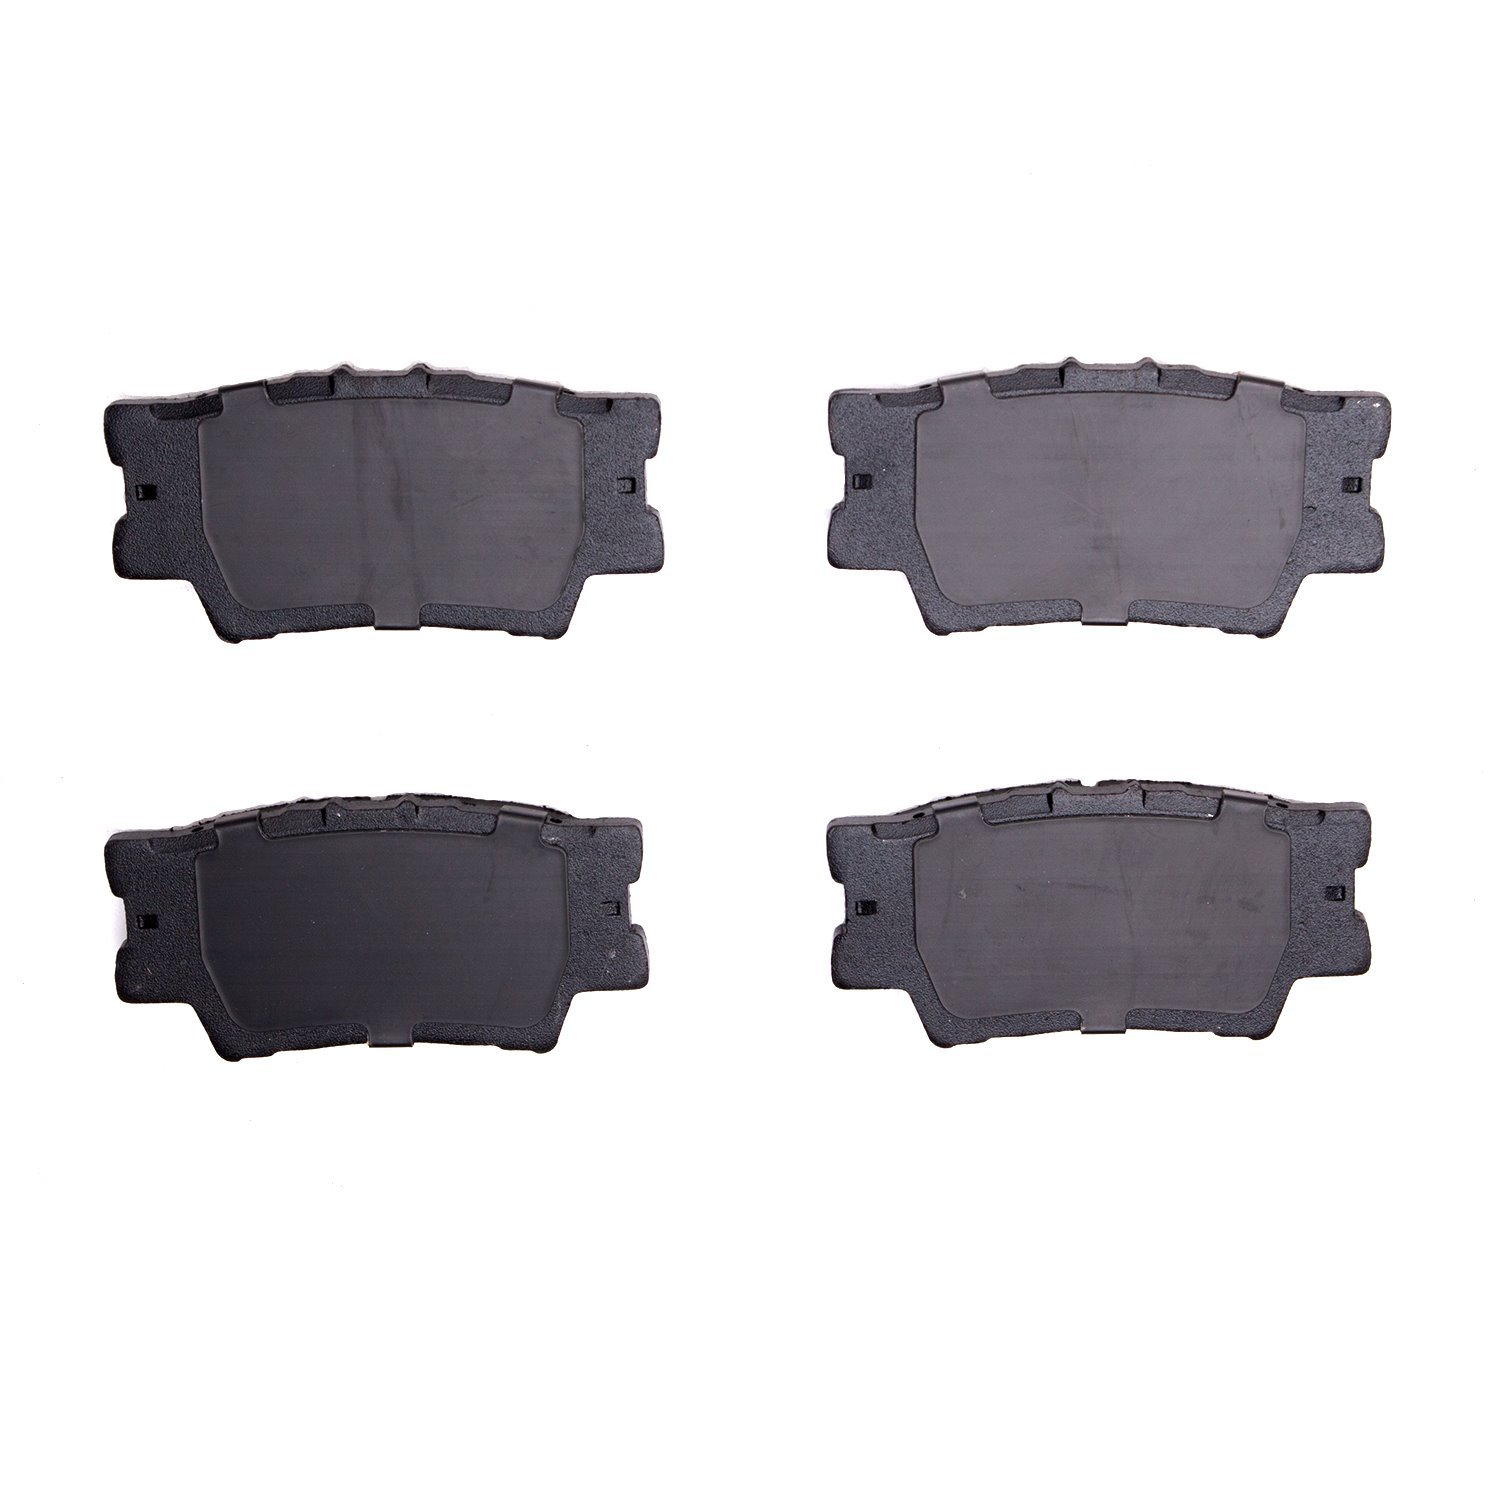 1310-1632-00 3000-Series Ceramic Brake Pads, Fits Select Multiple Makes/Models, Position: Rear